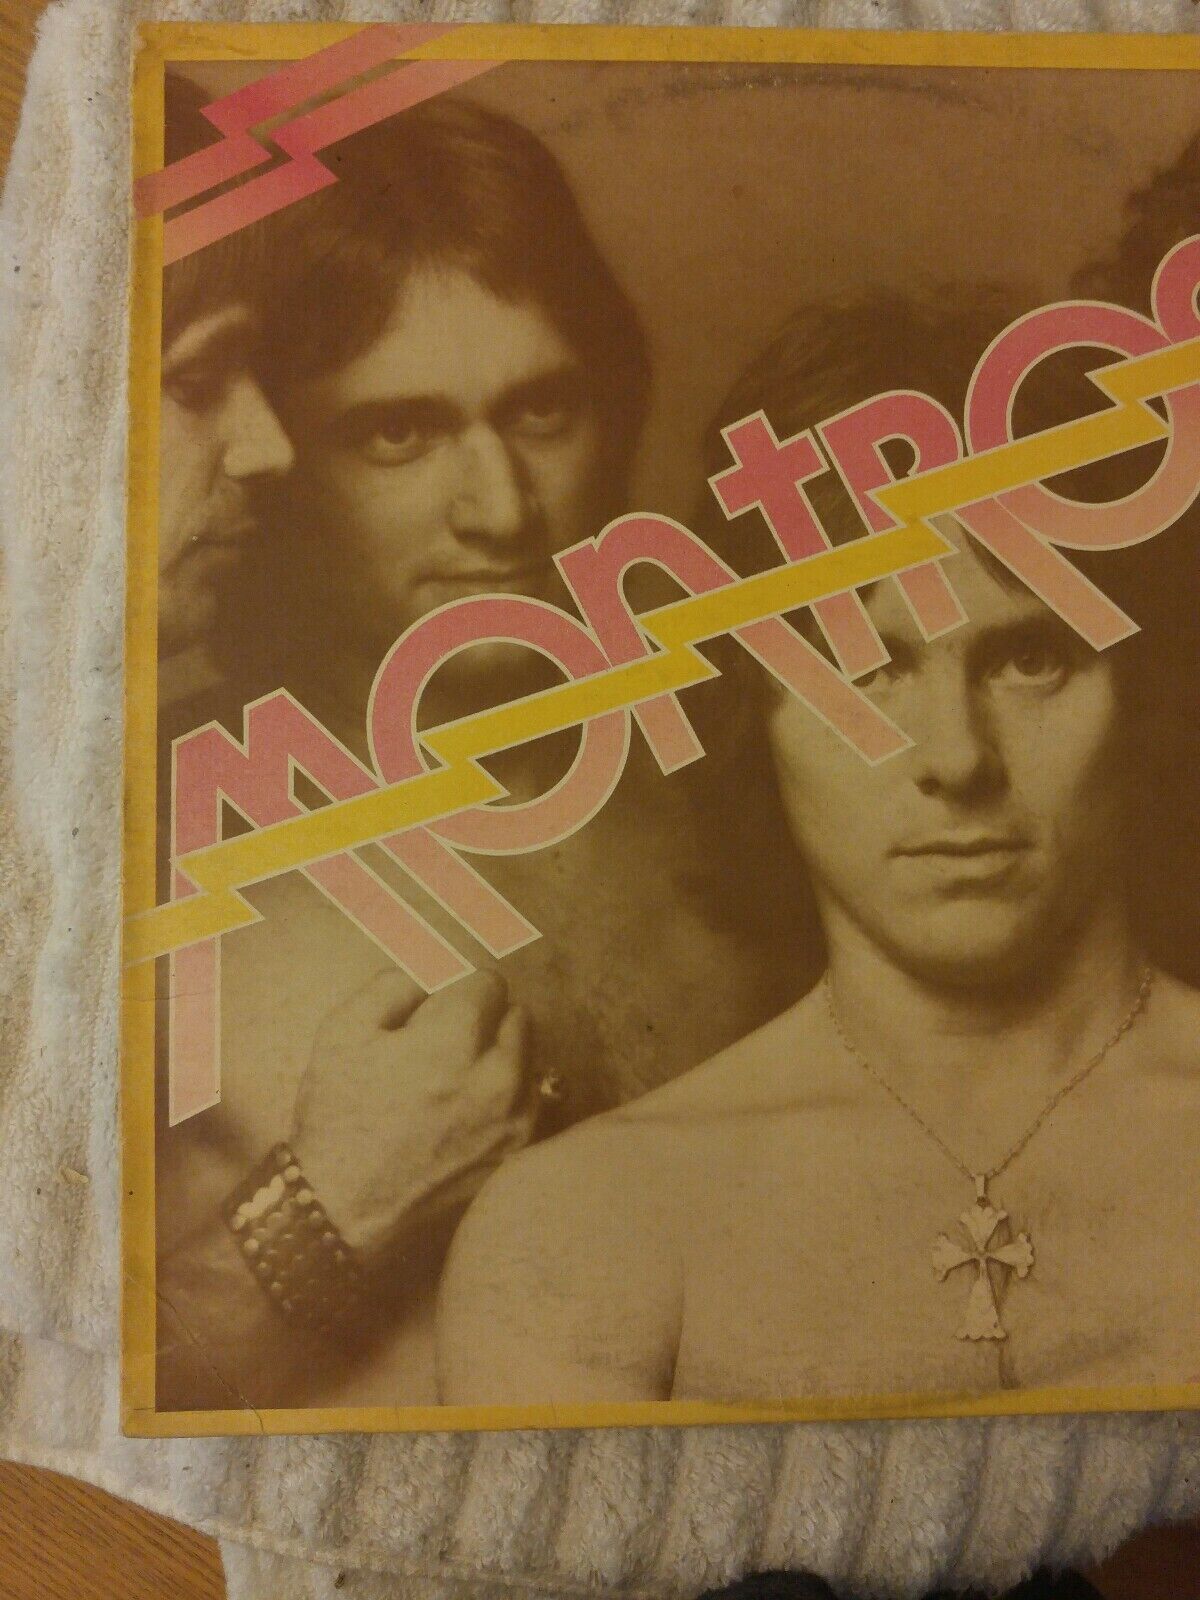 MONTROSE - Self Titled - 1973 LP Record Album - Warner Bros. BSK 3106